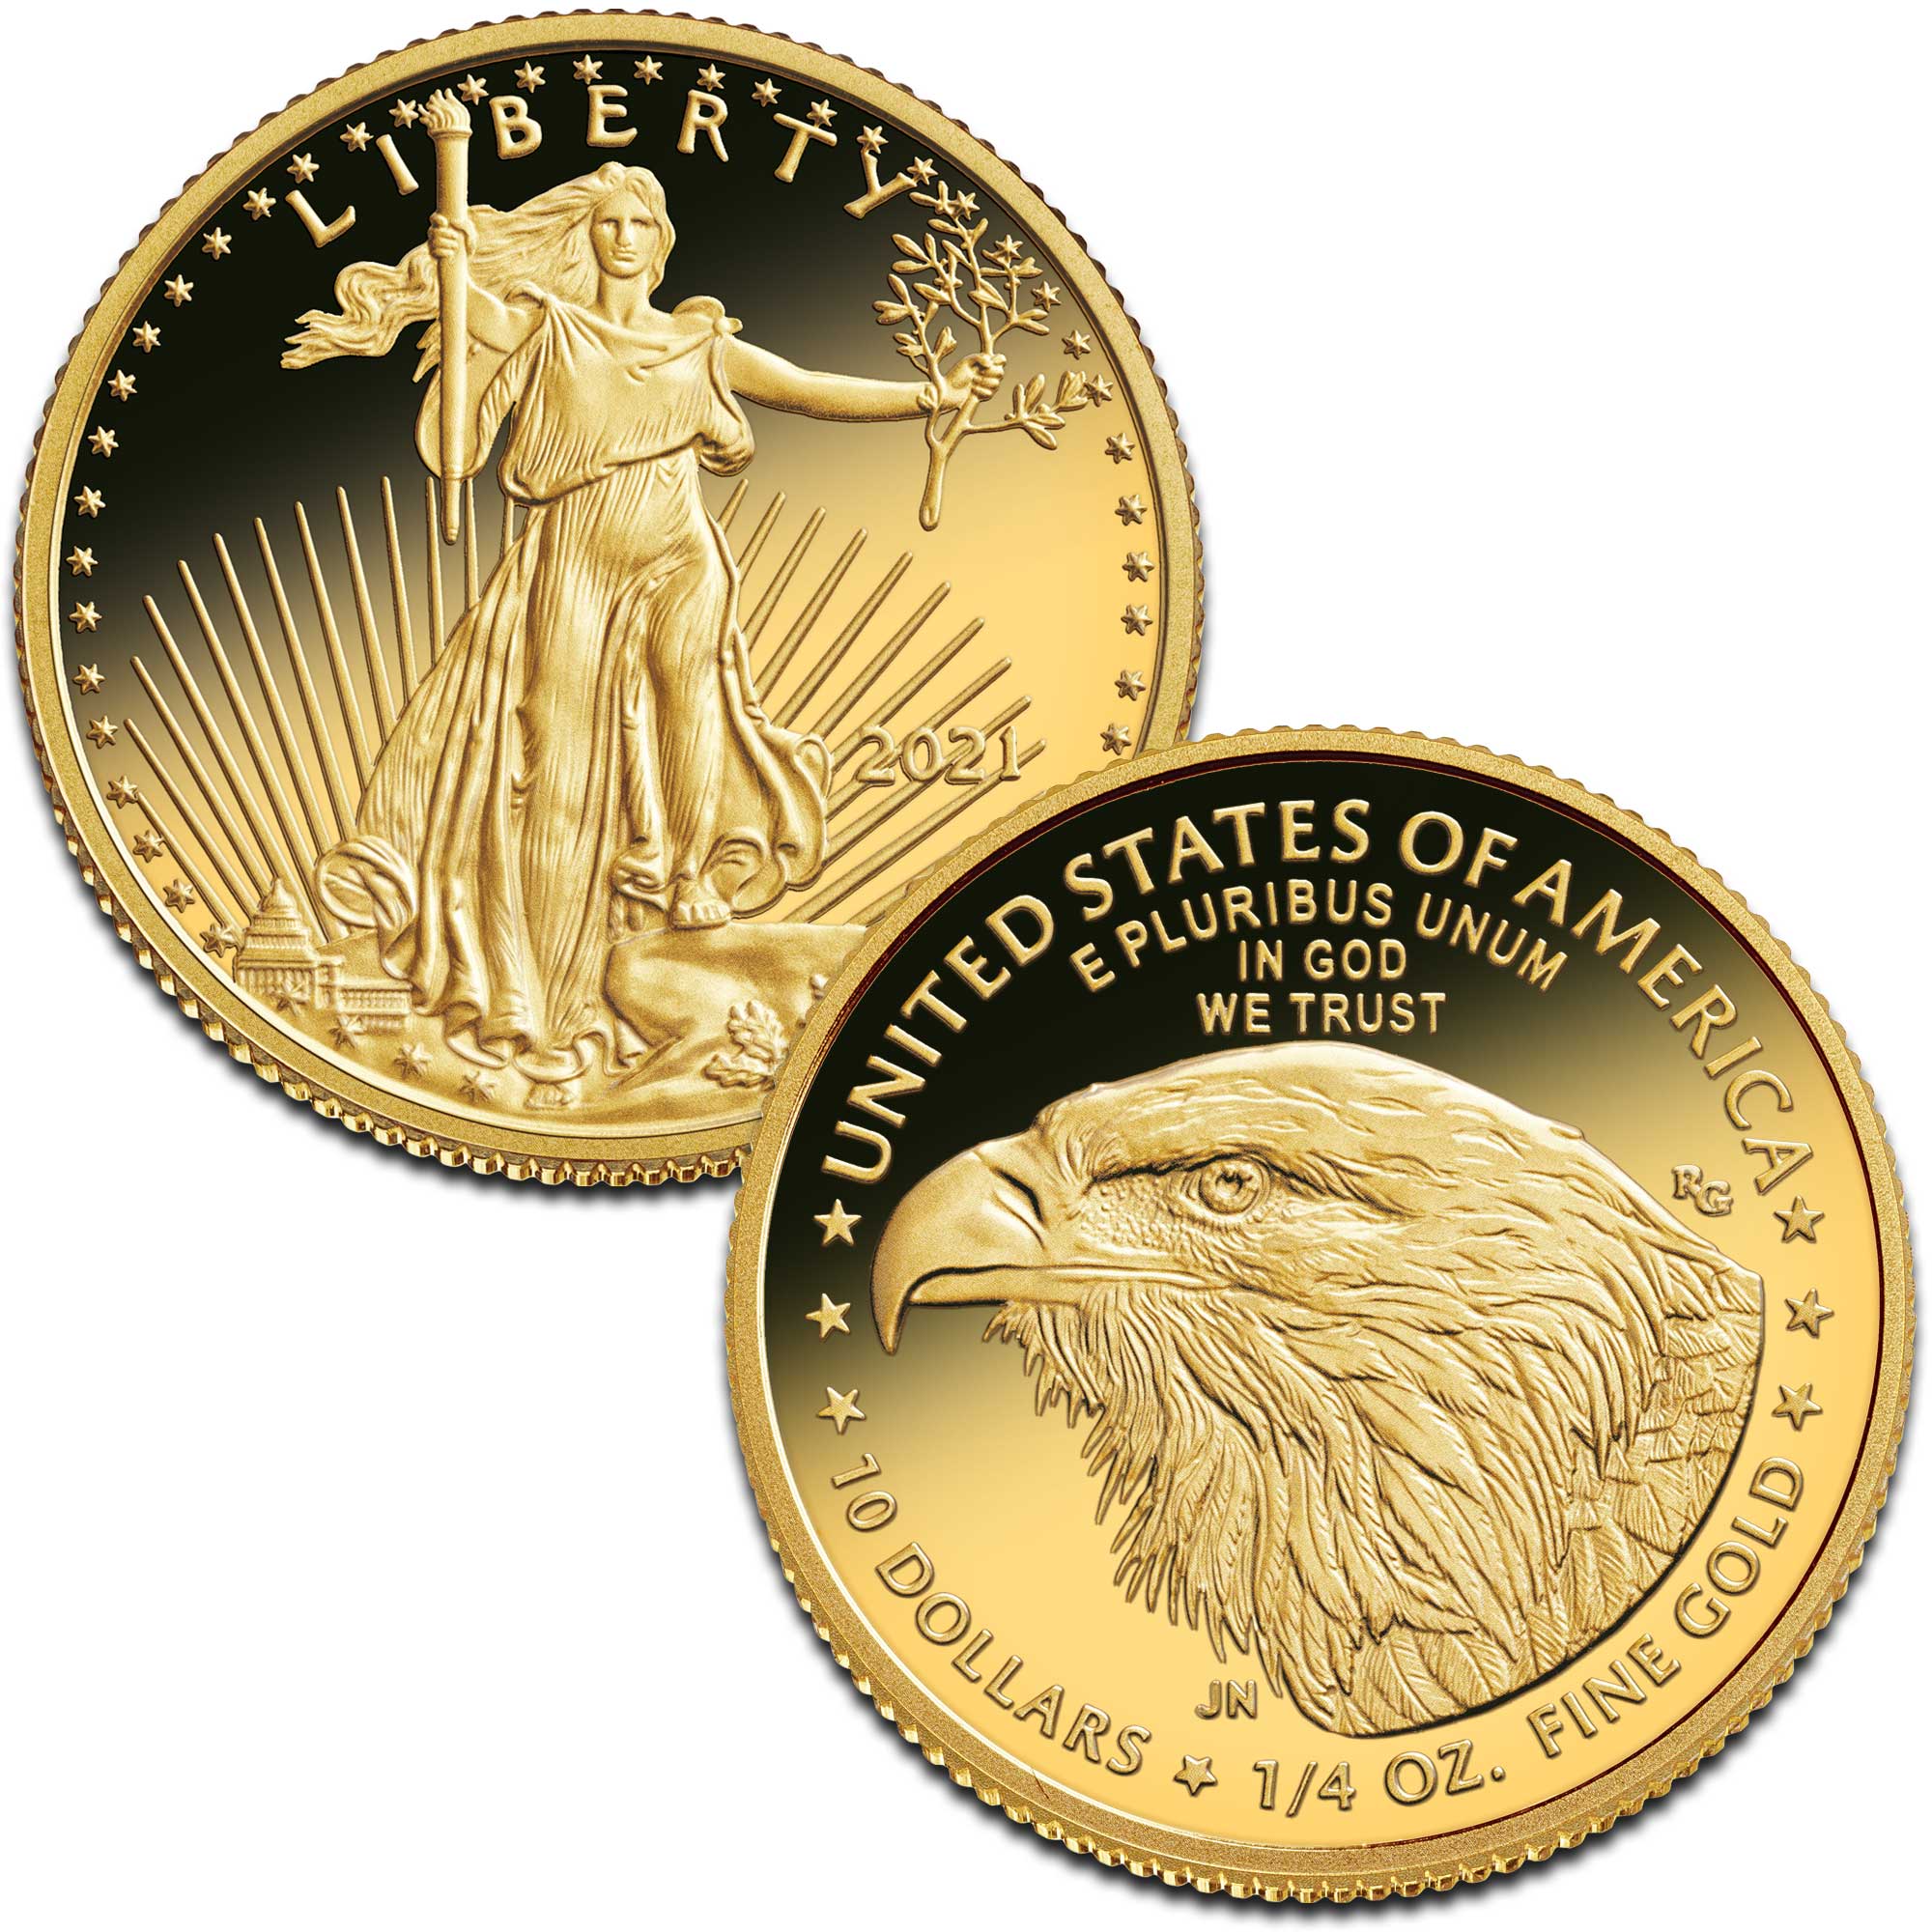 first eagle head gold american eagle proof coin set GF1 a Main